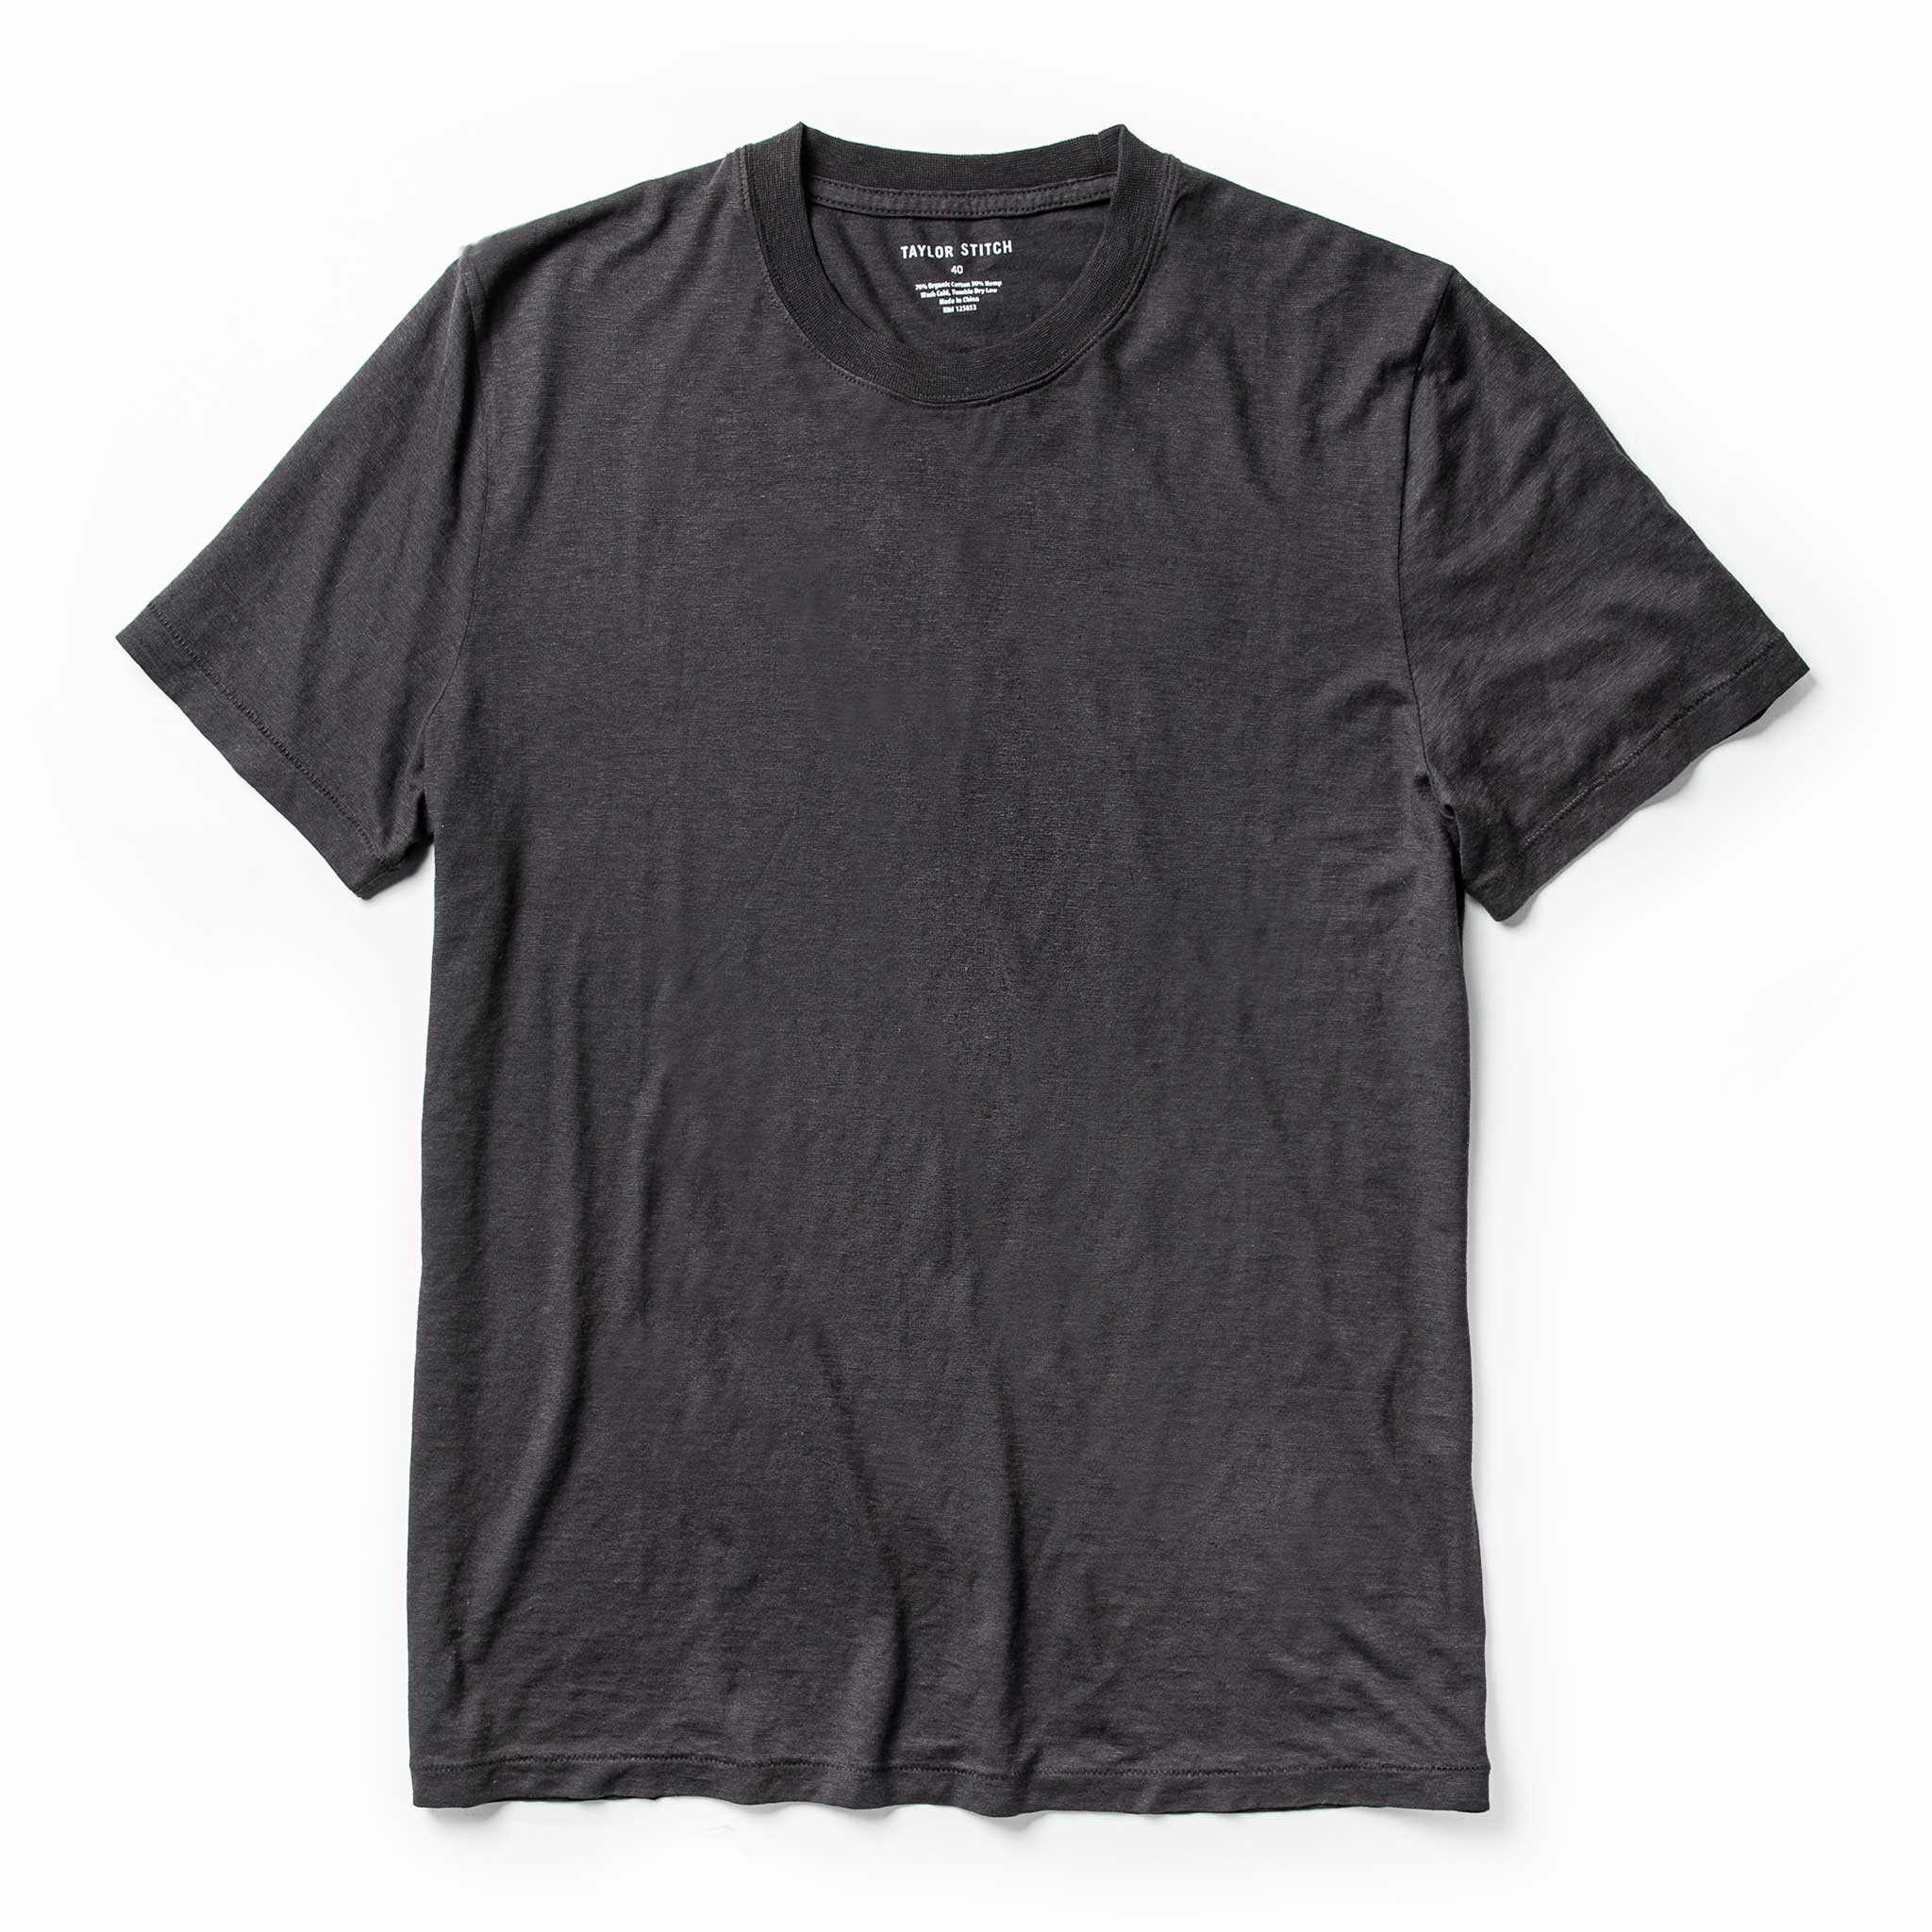 The Cotton Hemp Tee in Charcoal - Men's Hemp T-Shirts | Taylor Stitch